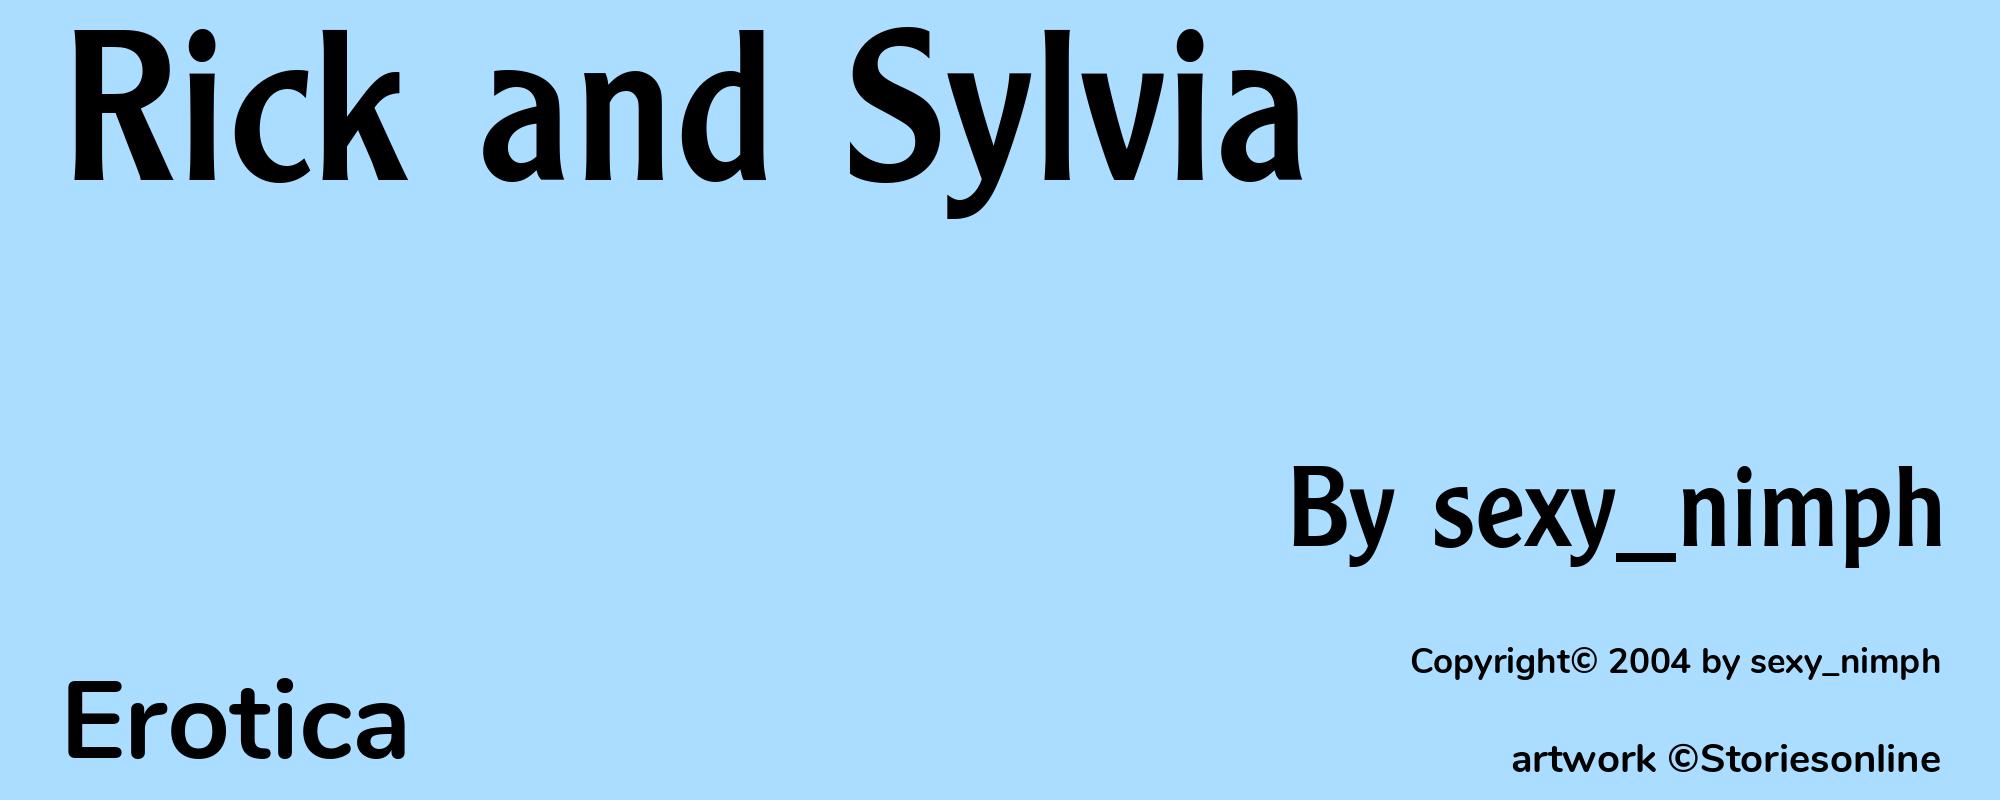 Rick and Sylvia - Cover